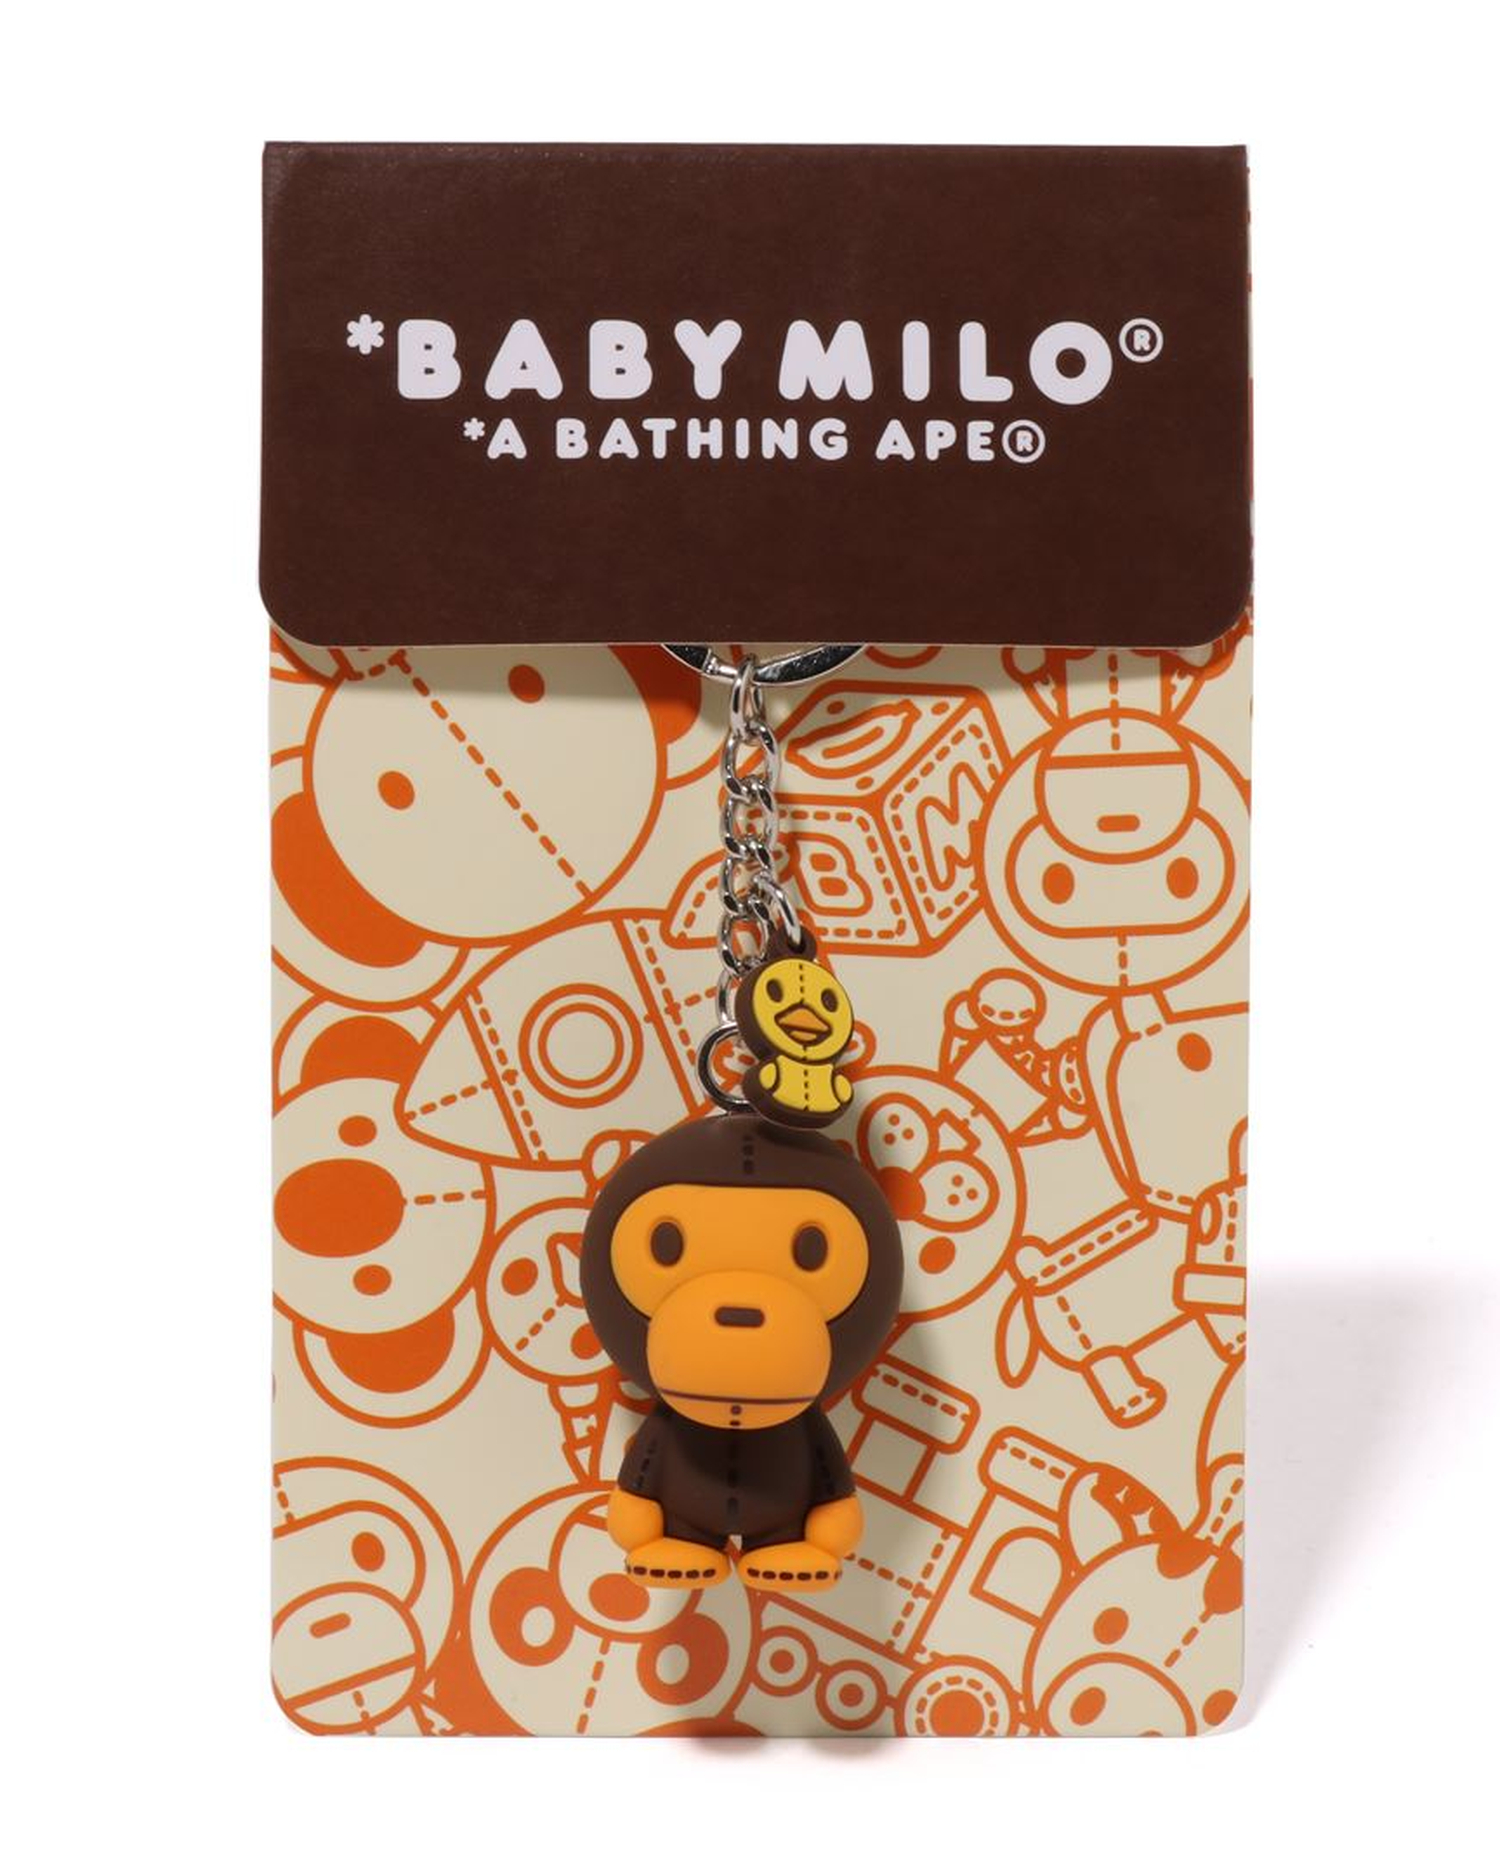 A BATHING APE® Kids Baby Milo Toy Key chain | ITeSHOP